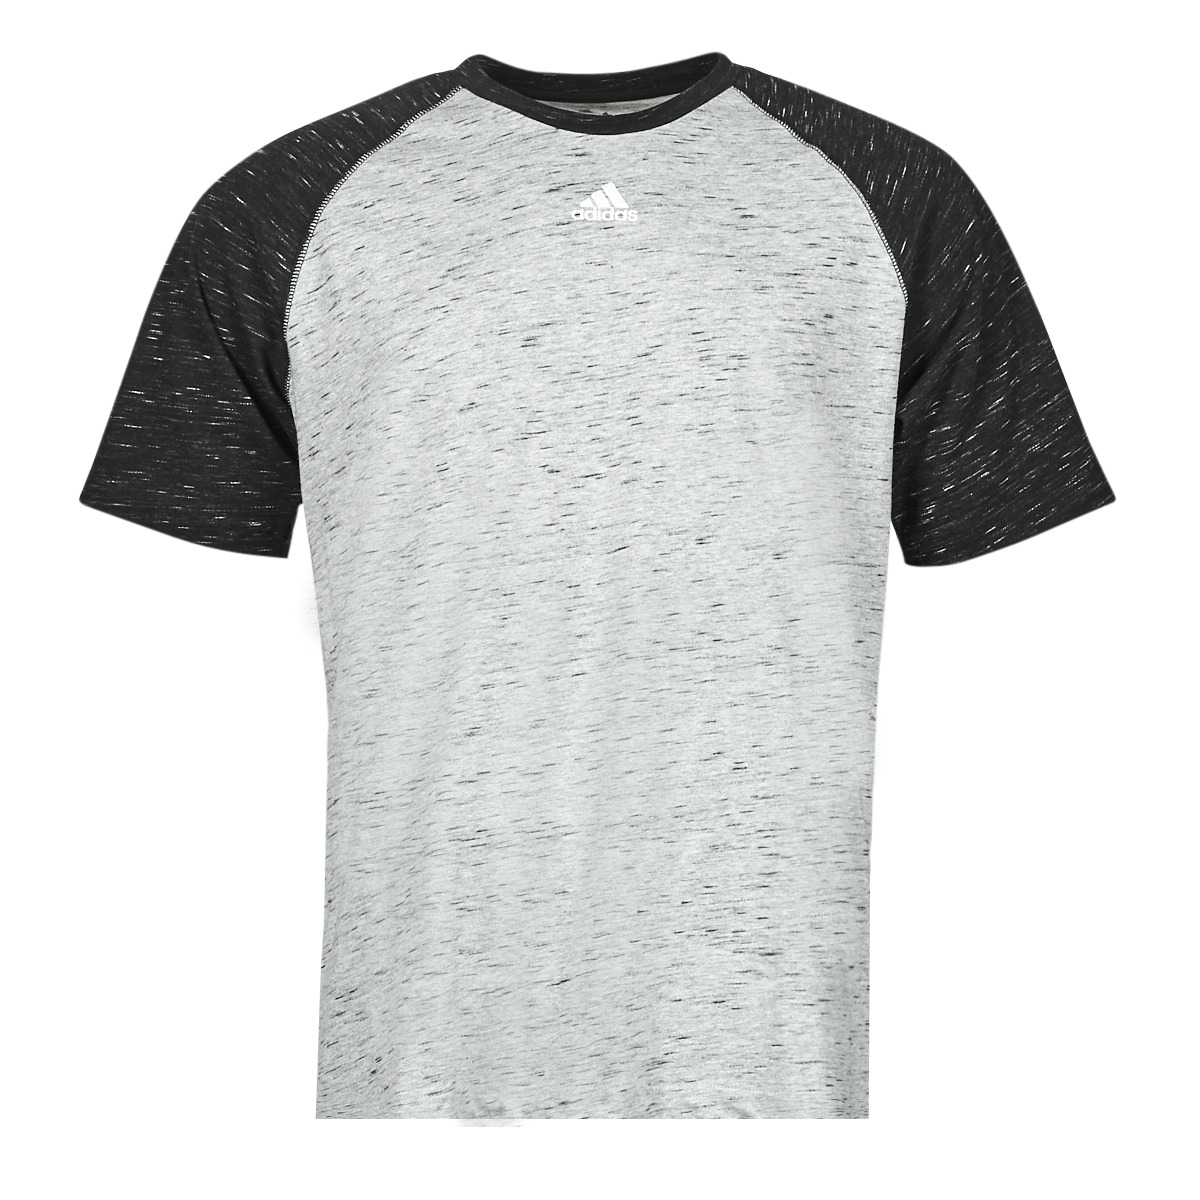 textil Herre T-shirts m. korte ærmer adidas Performance MEL T-SHIRT Medium / Grå / Lyng / Sort / Flerfarvet